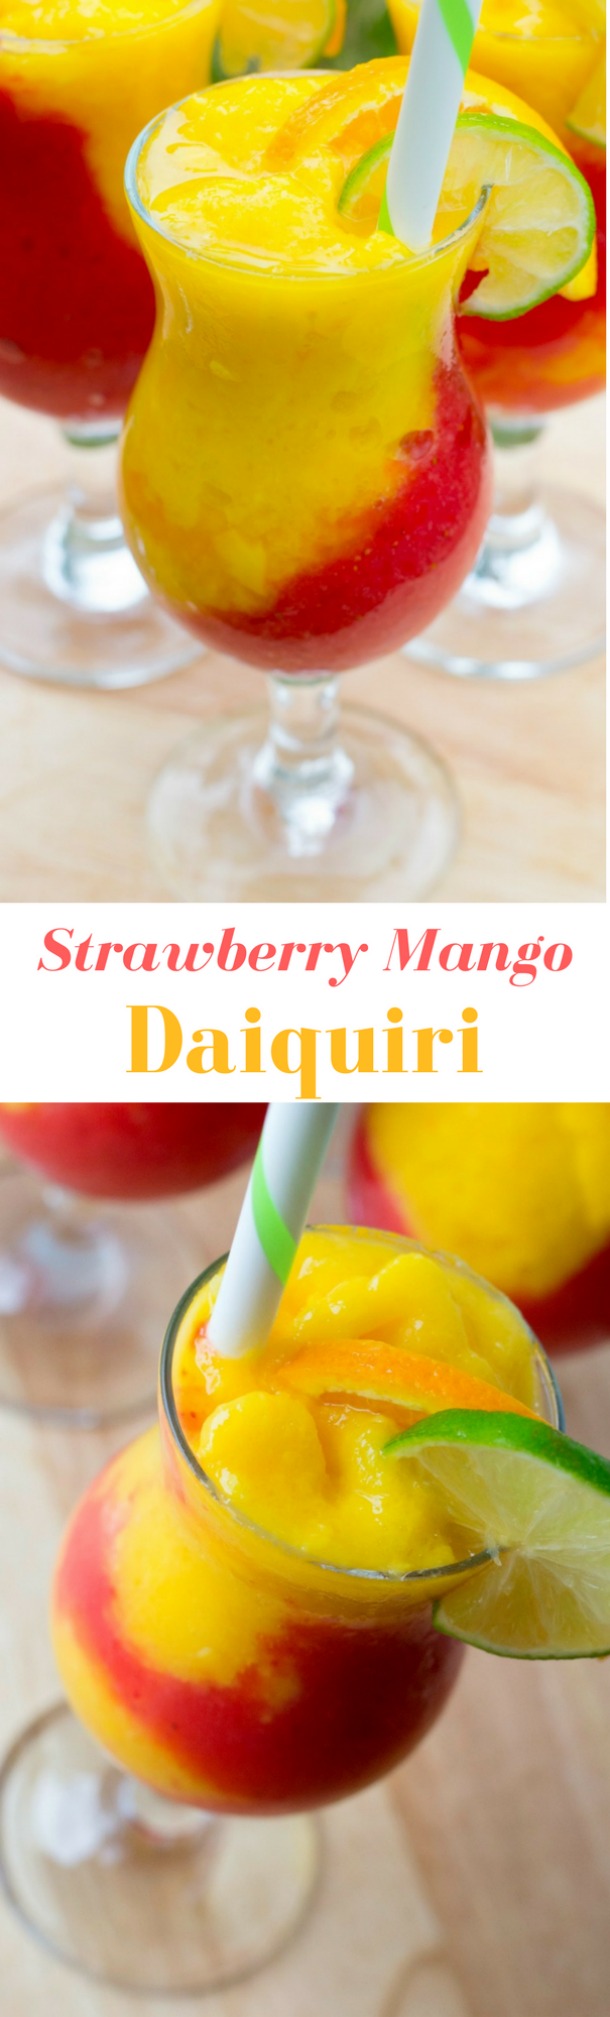 strawberry mango daiquiri cocktail recipe